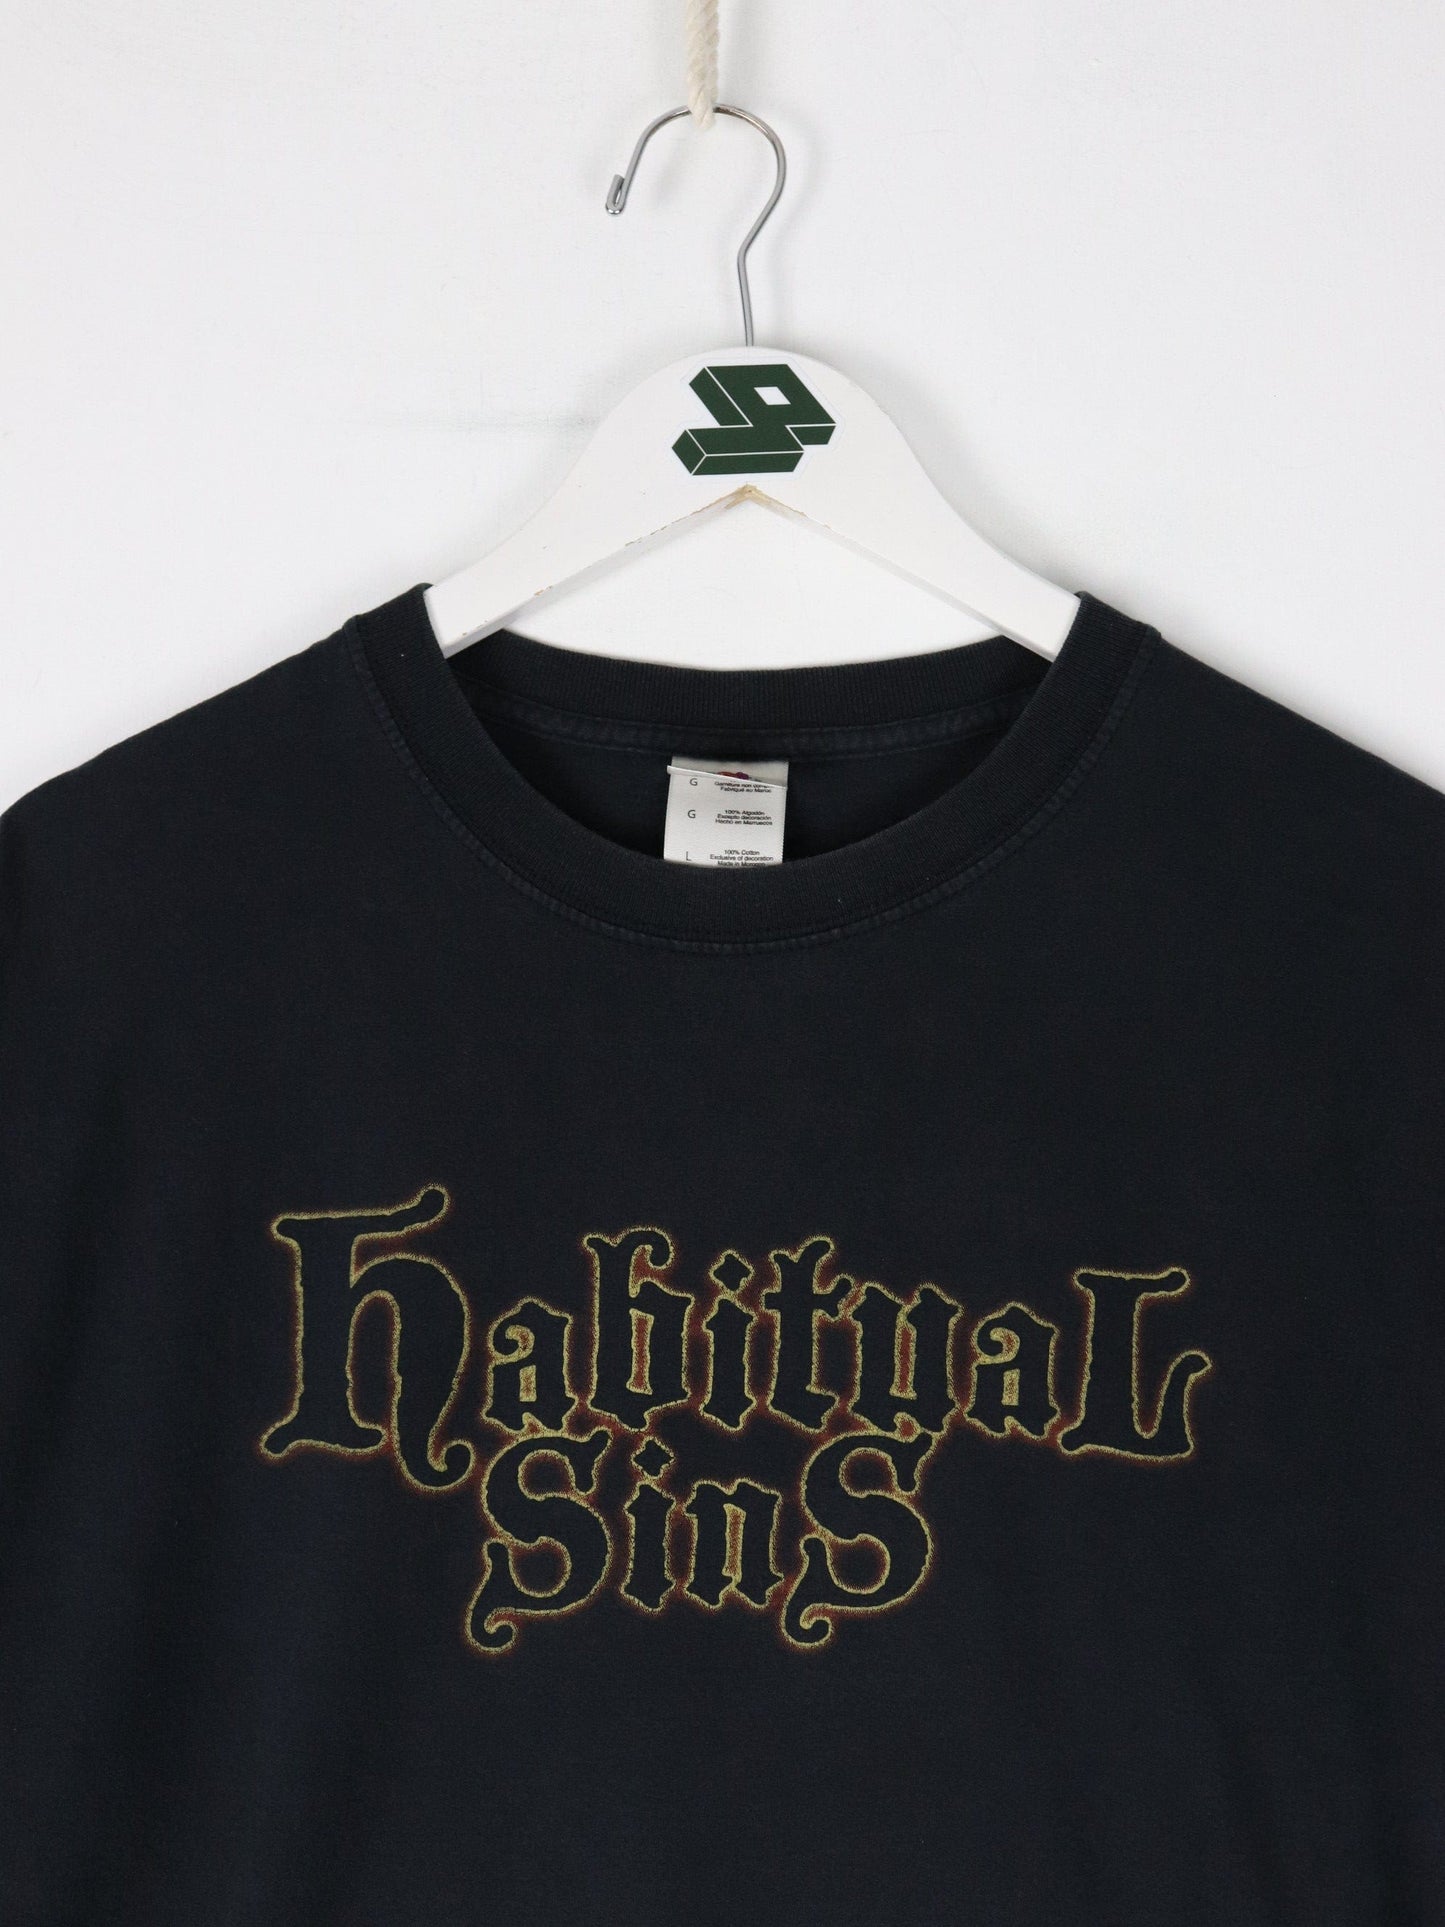 Other T-Shirts & Tank Tops Habitual Sins T Shirt Mens Large Black Band Metal